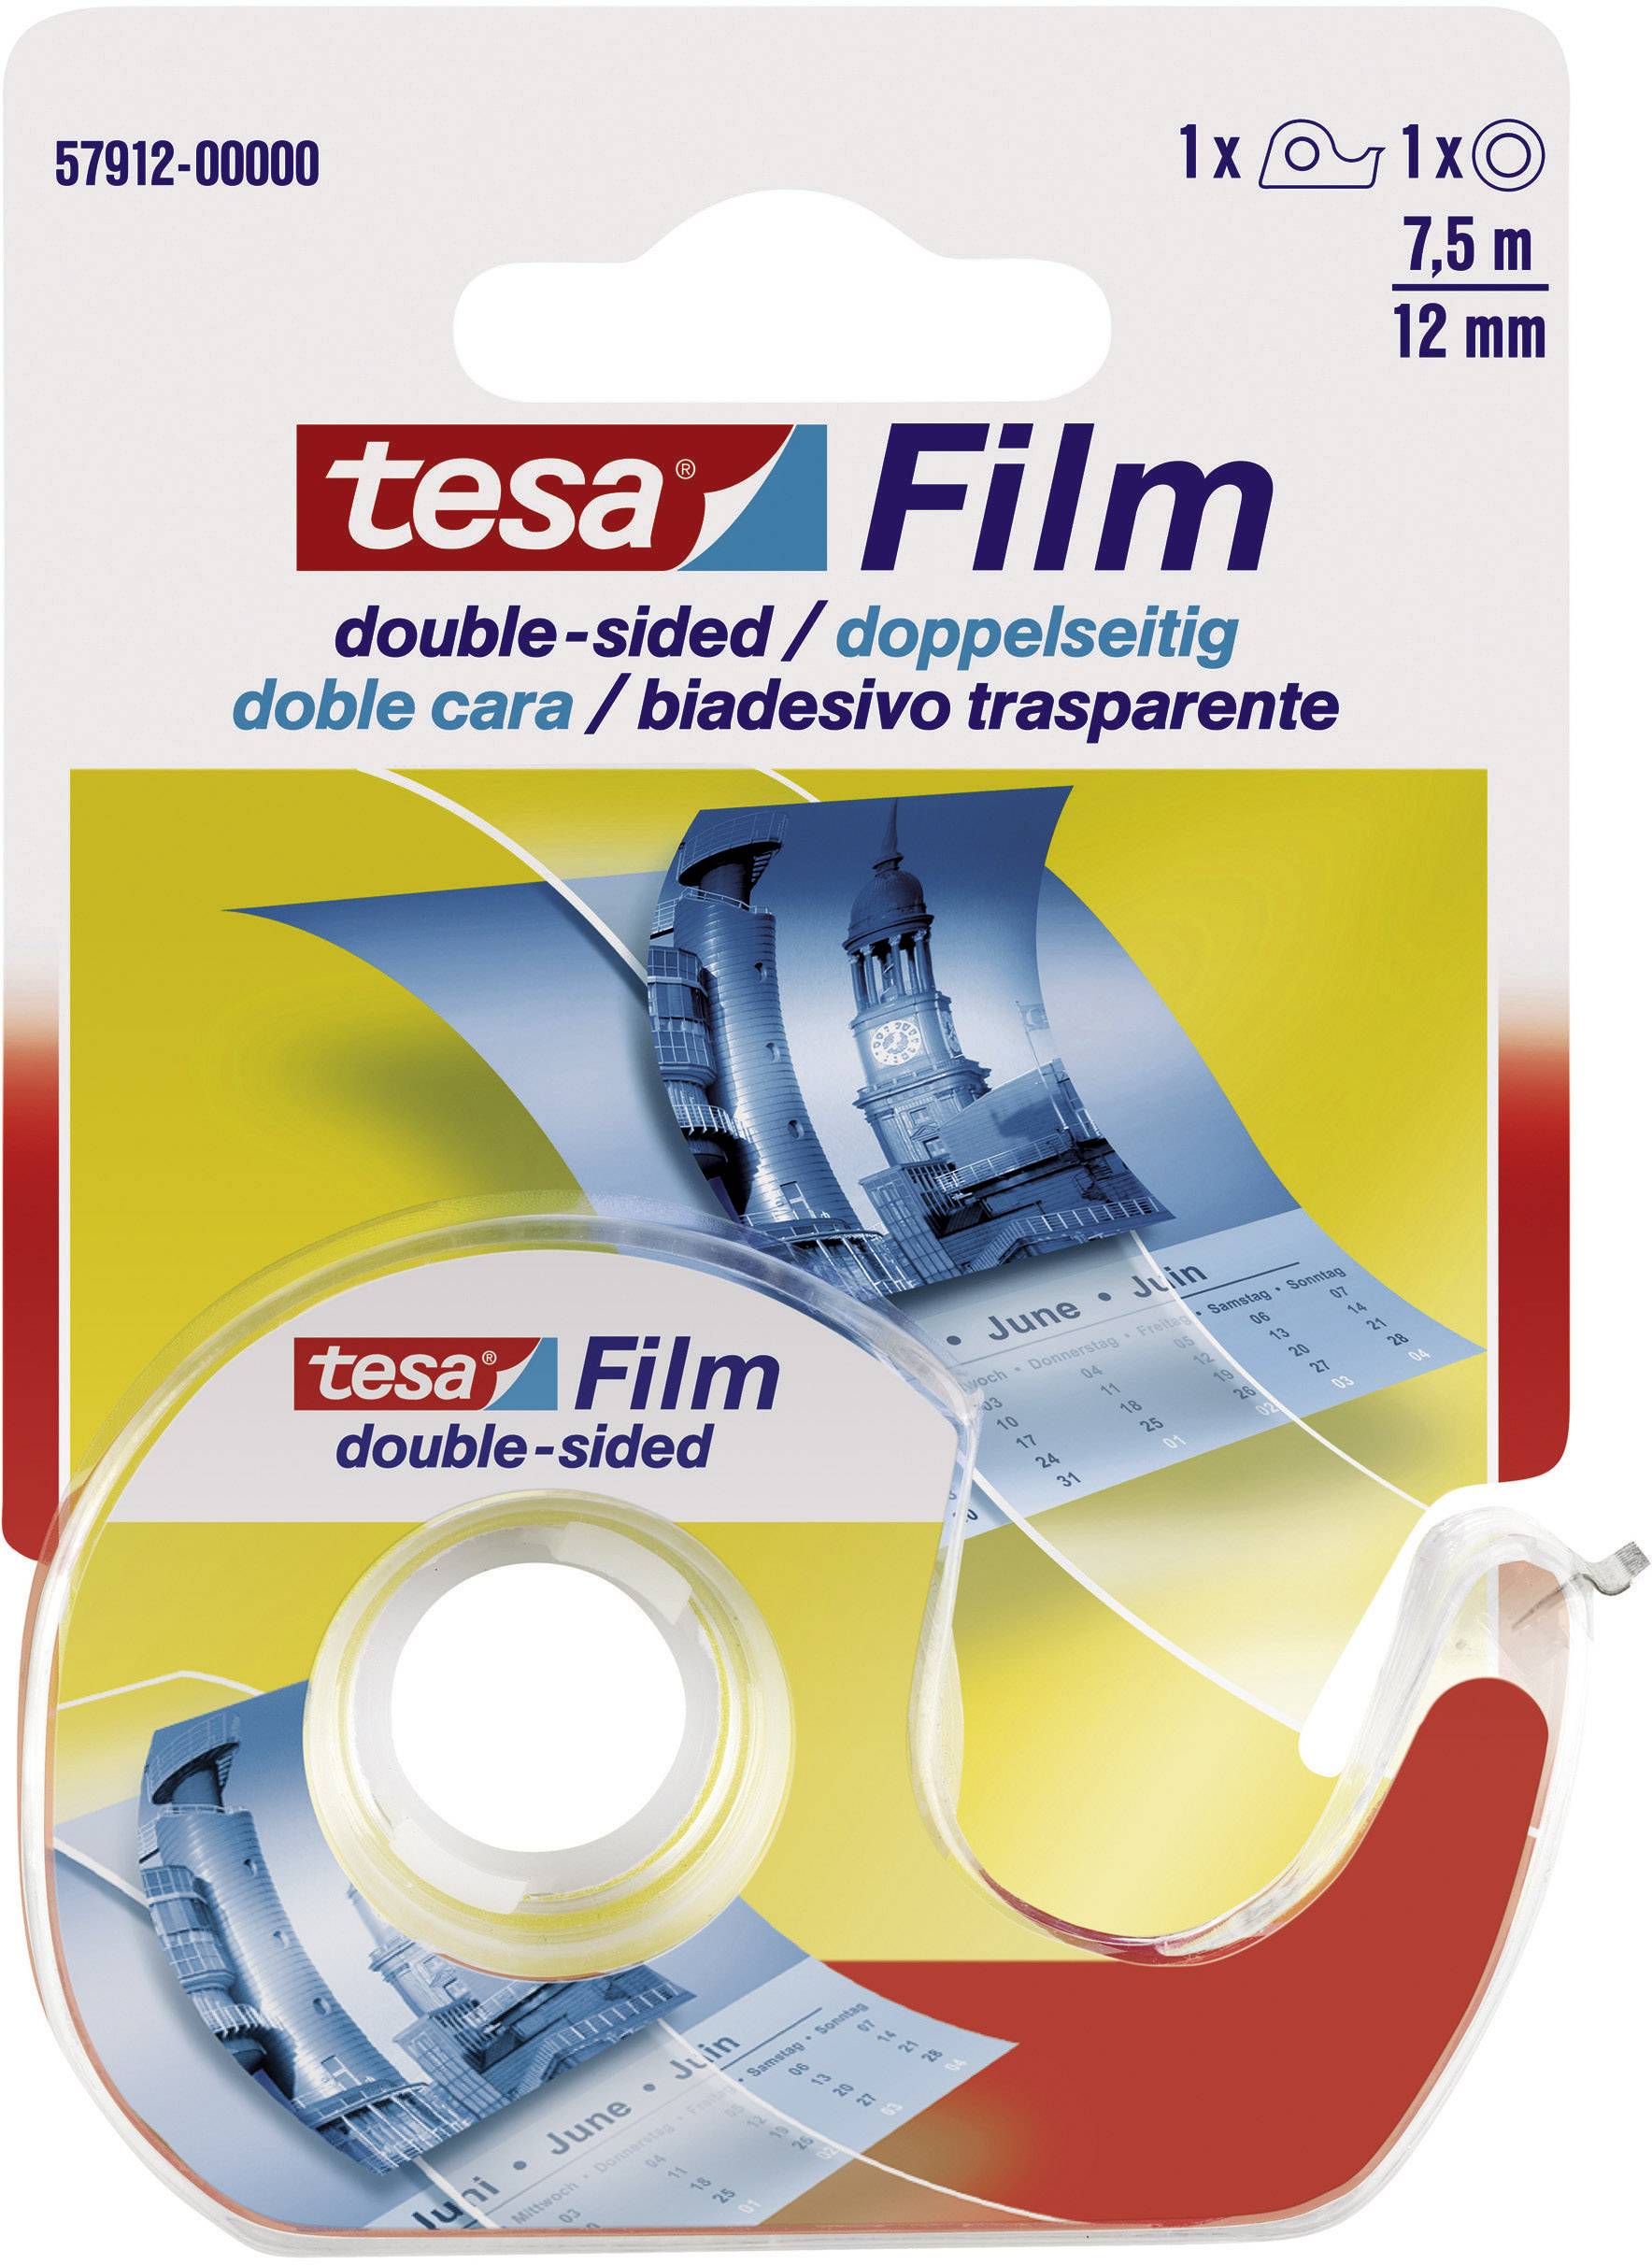 Decimale Handelsmerk Andere plaatsen tesa Film Double Sided Tape 12mm x 7.5m | Conrad.com